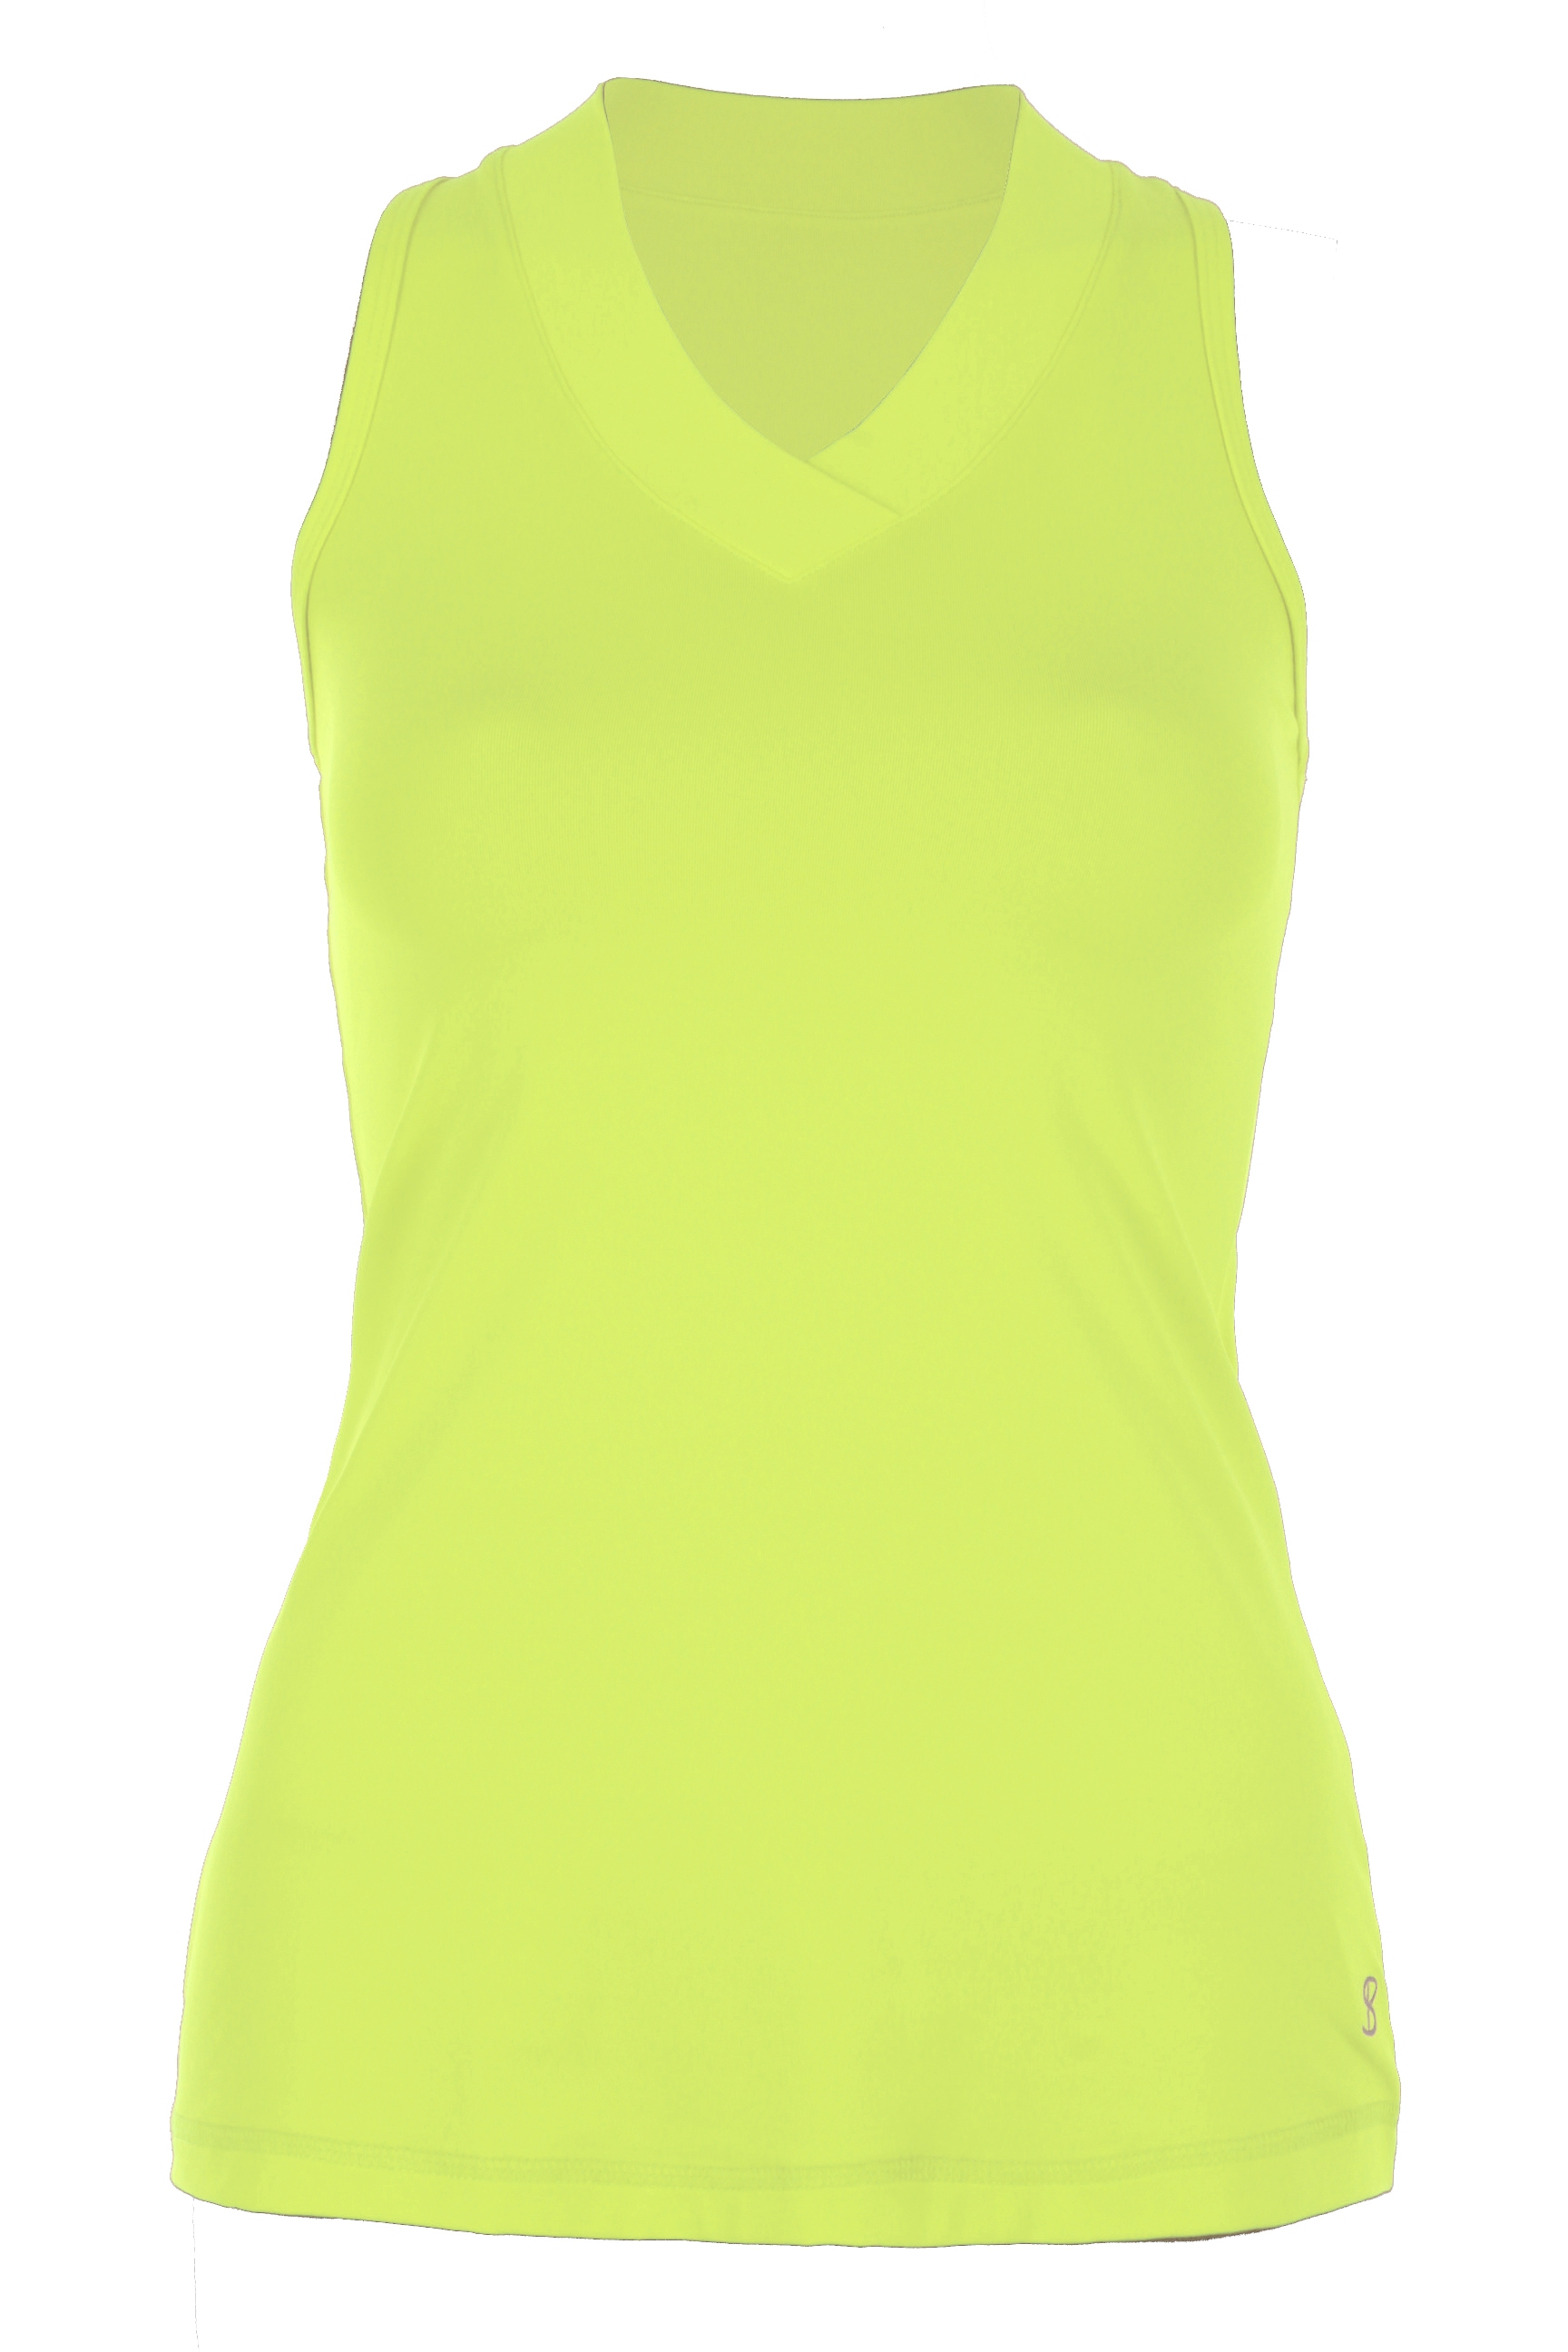 Sofibella Women&amp;apos;s Athletic Racerback Tennis Top (Electric Yellow)